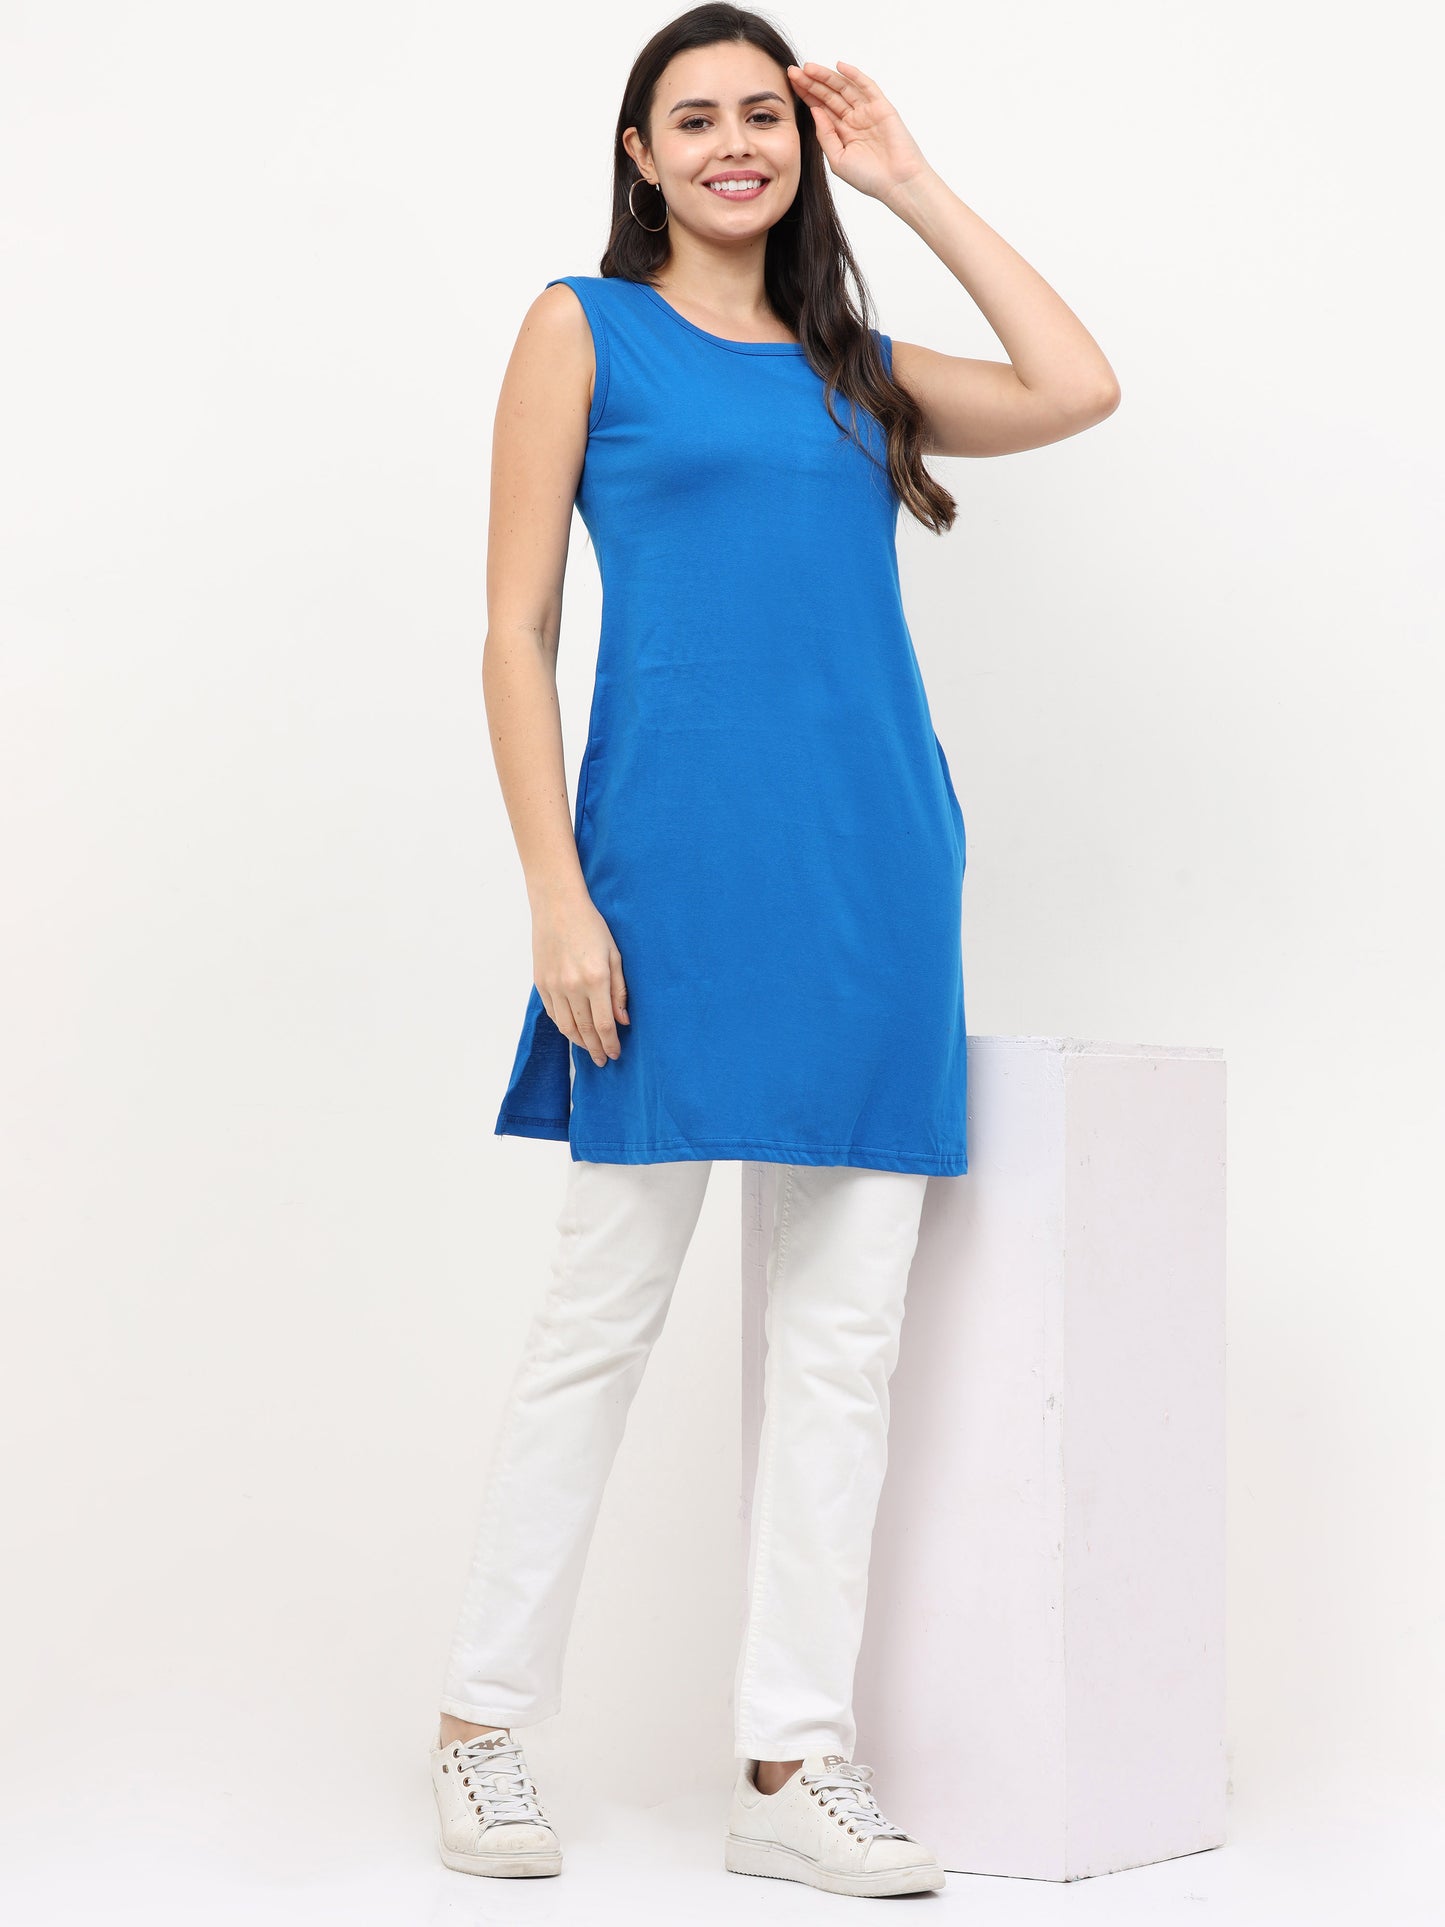 Women's Cotton Round Neck Plain Royal Blue Color Sleeveless Long Top